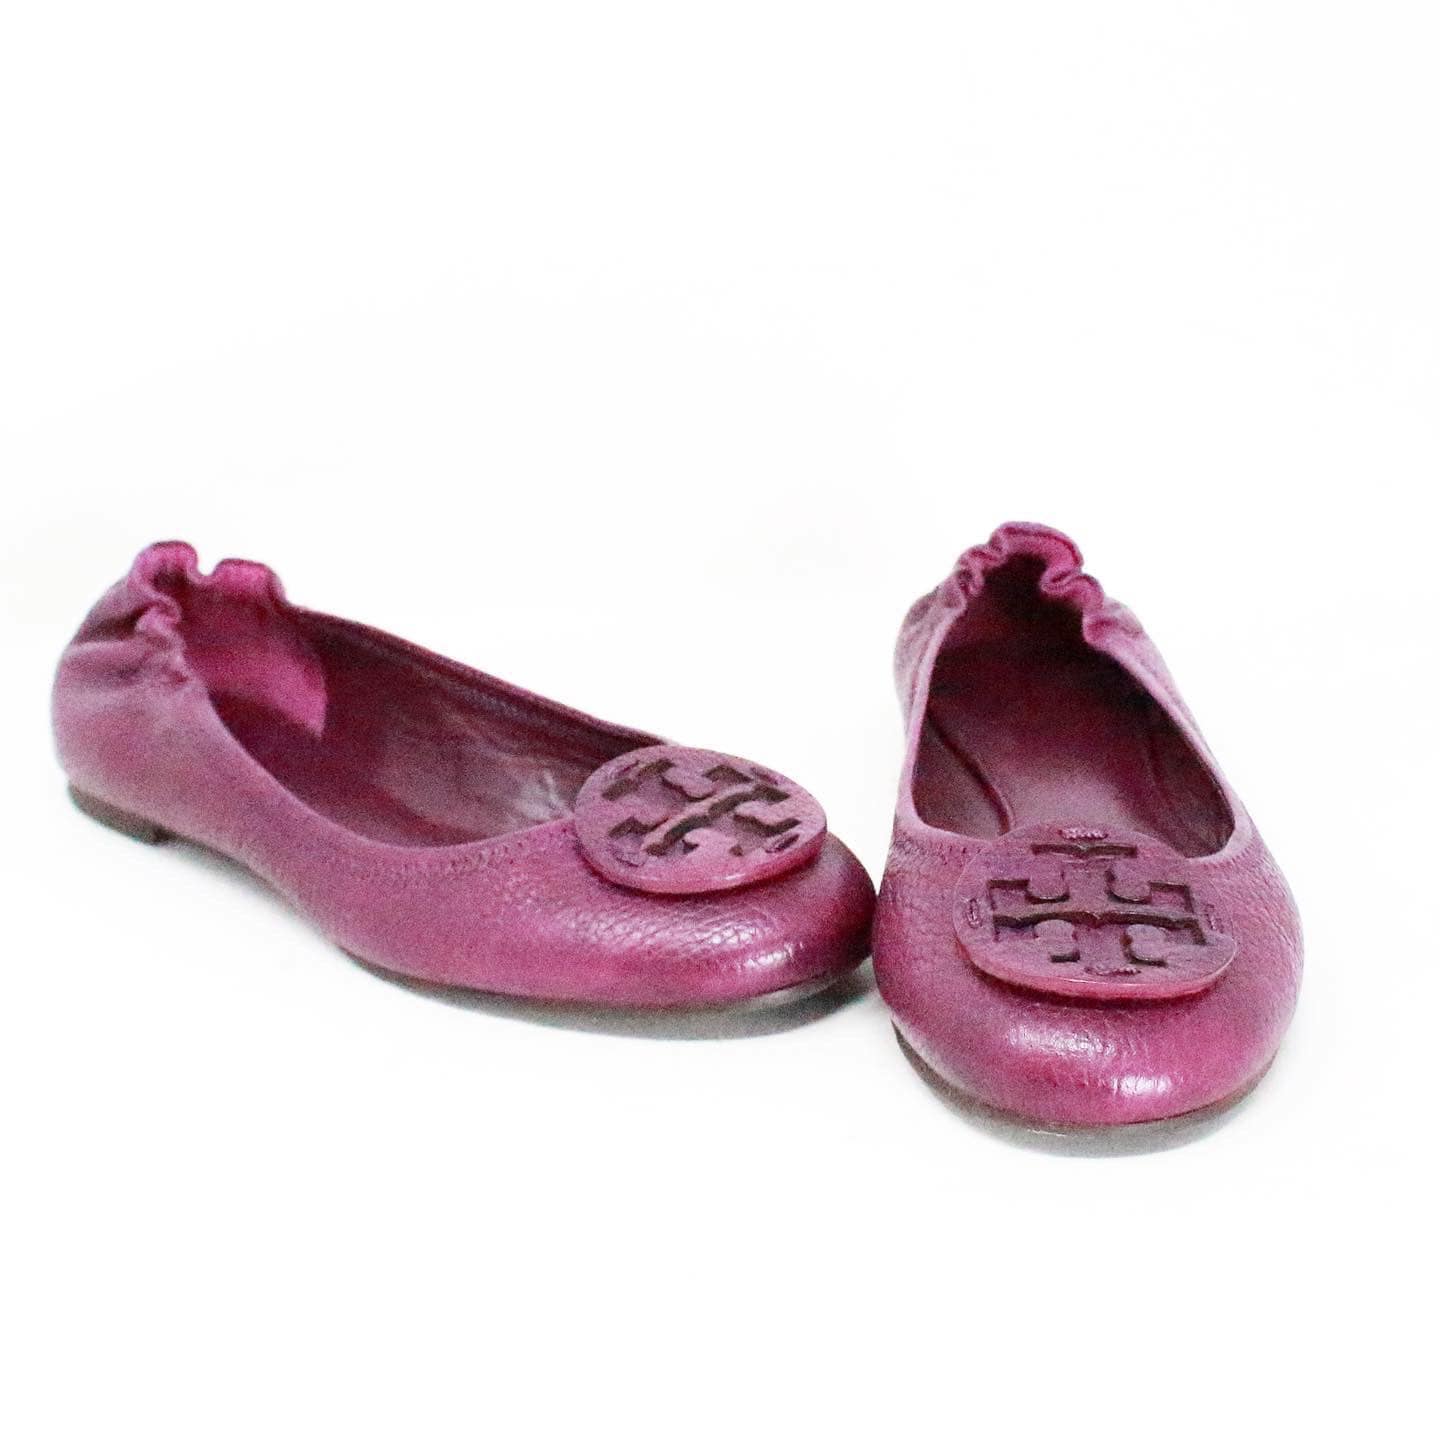 Tory Burch Purple Flats Size 7 item 40486 1